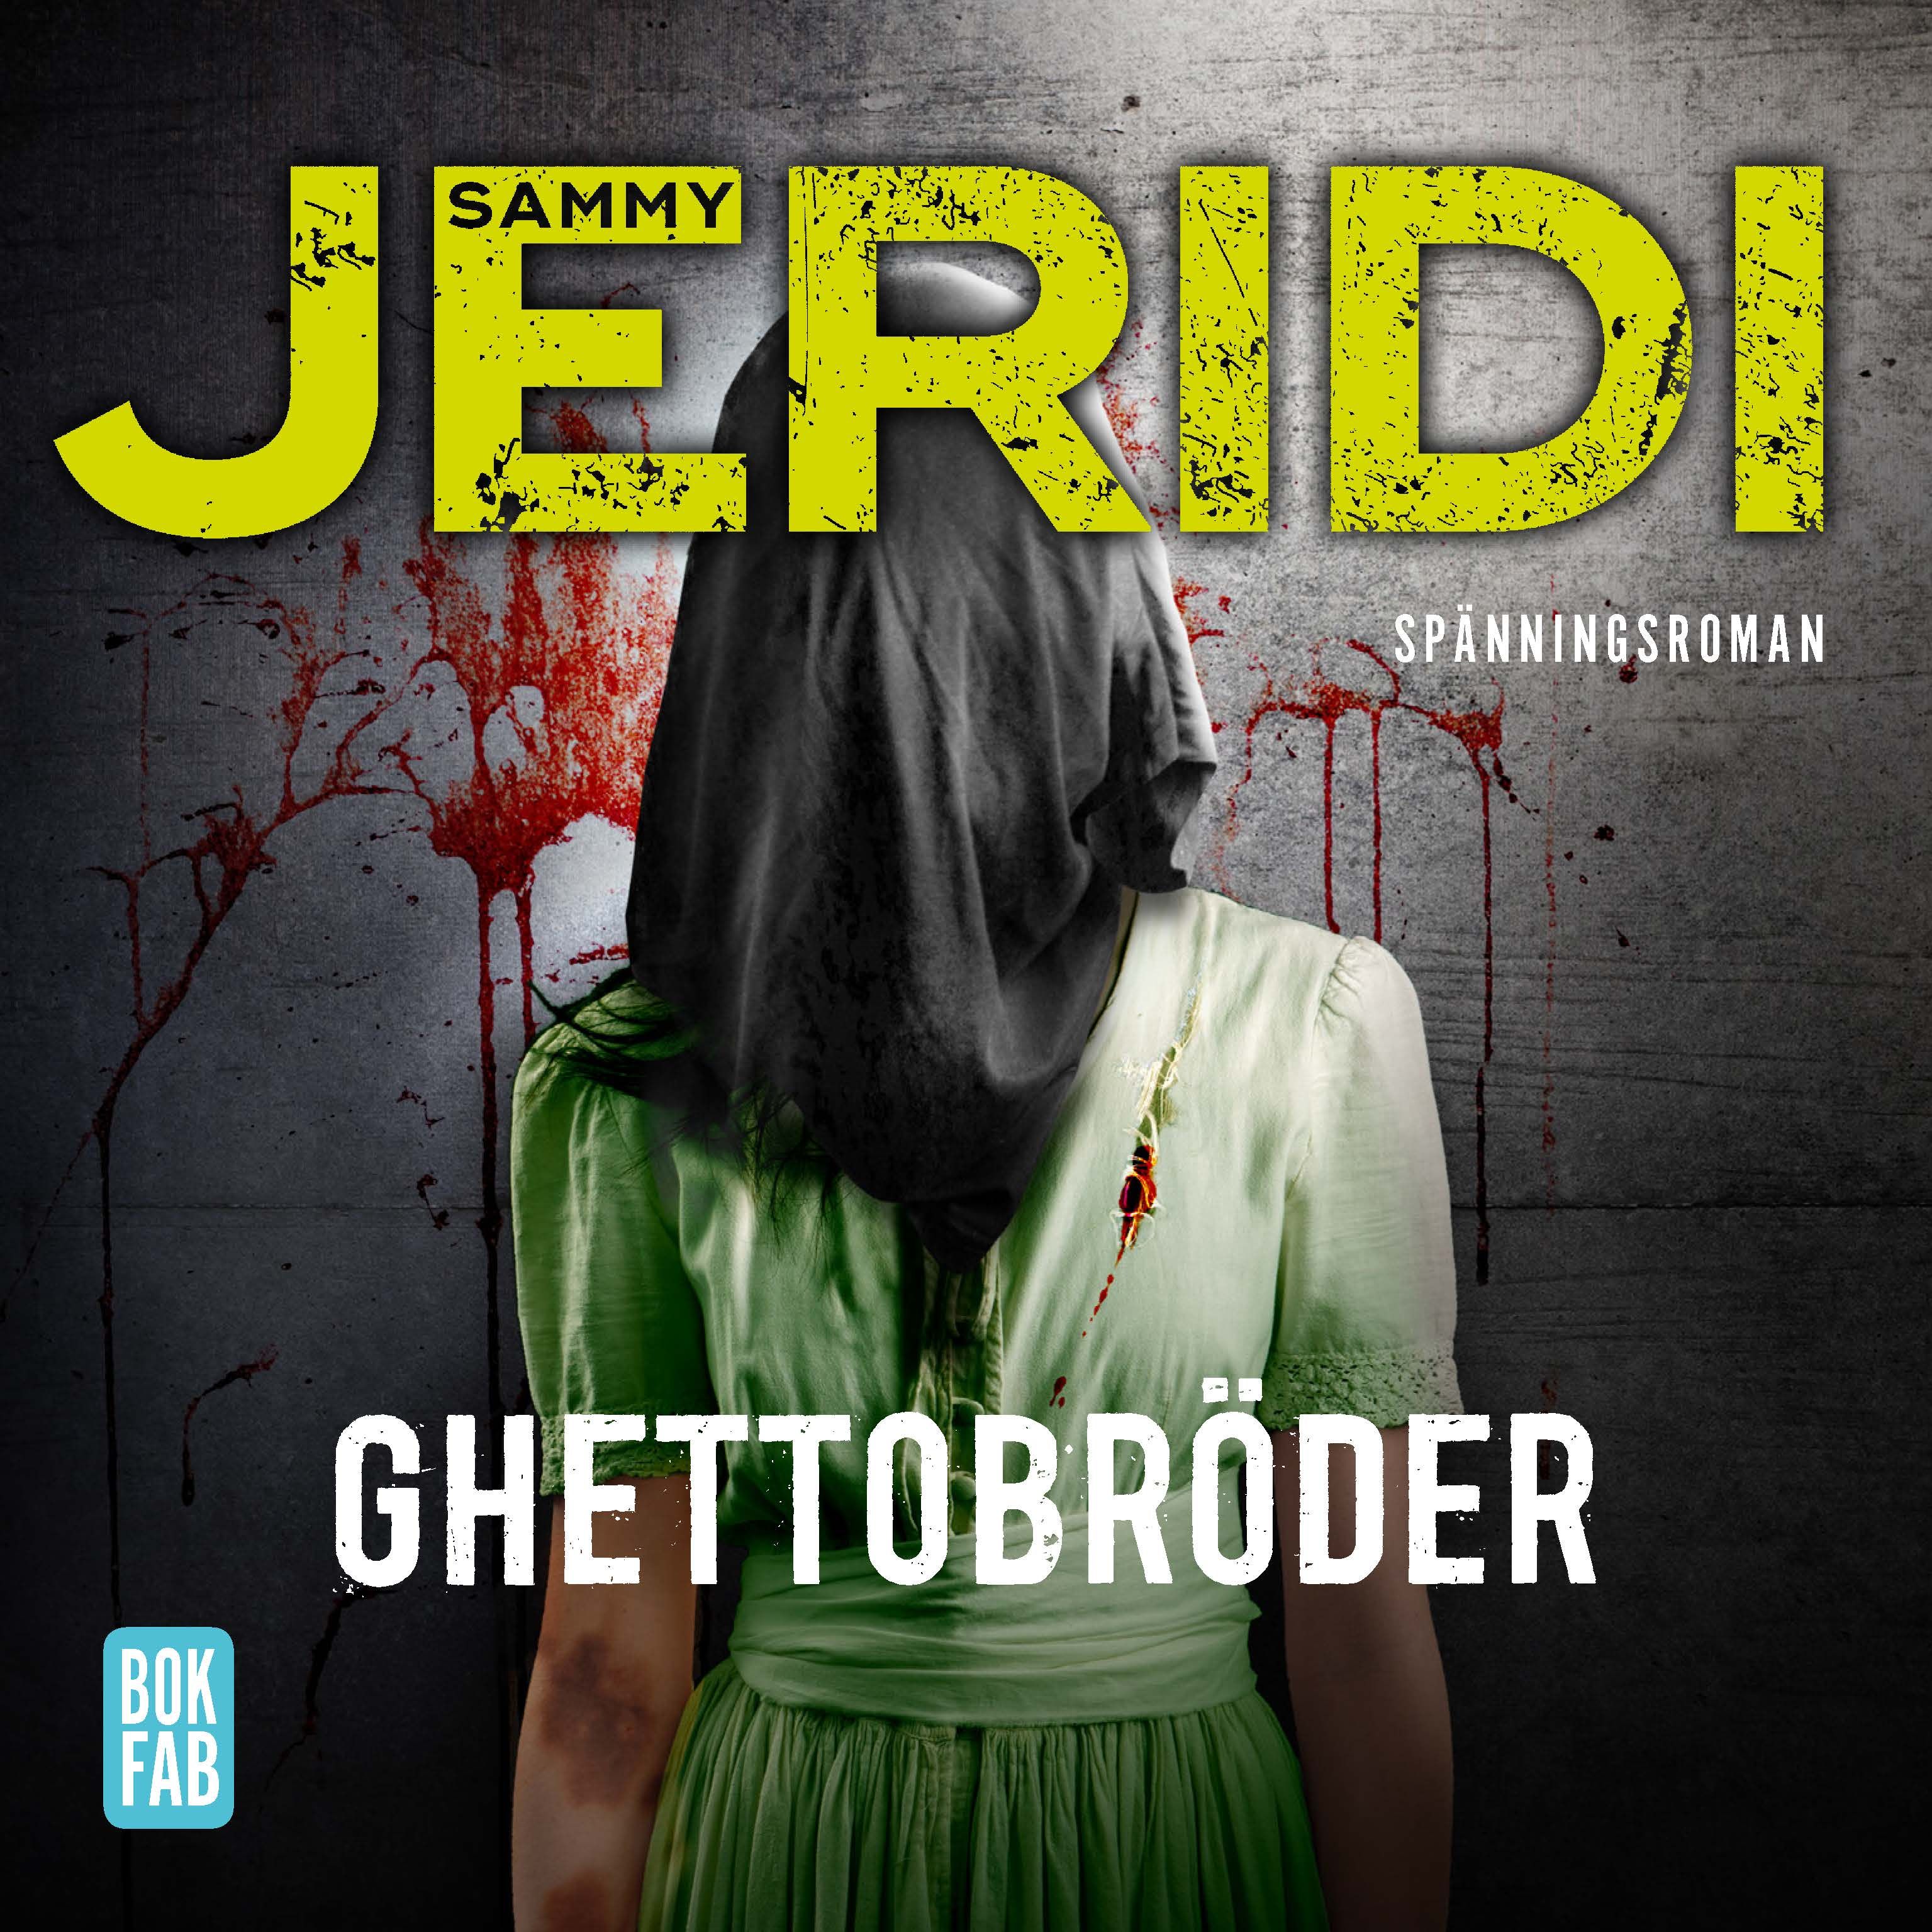 Ghettobröder, ljudbok av Sammy Jeridi